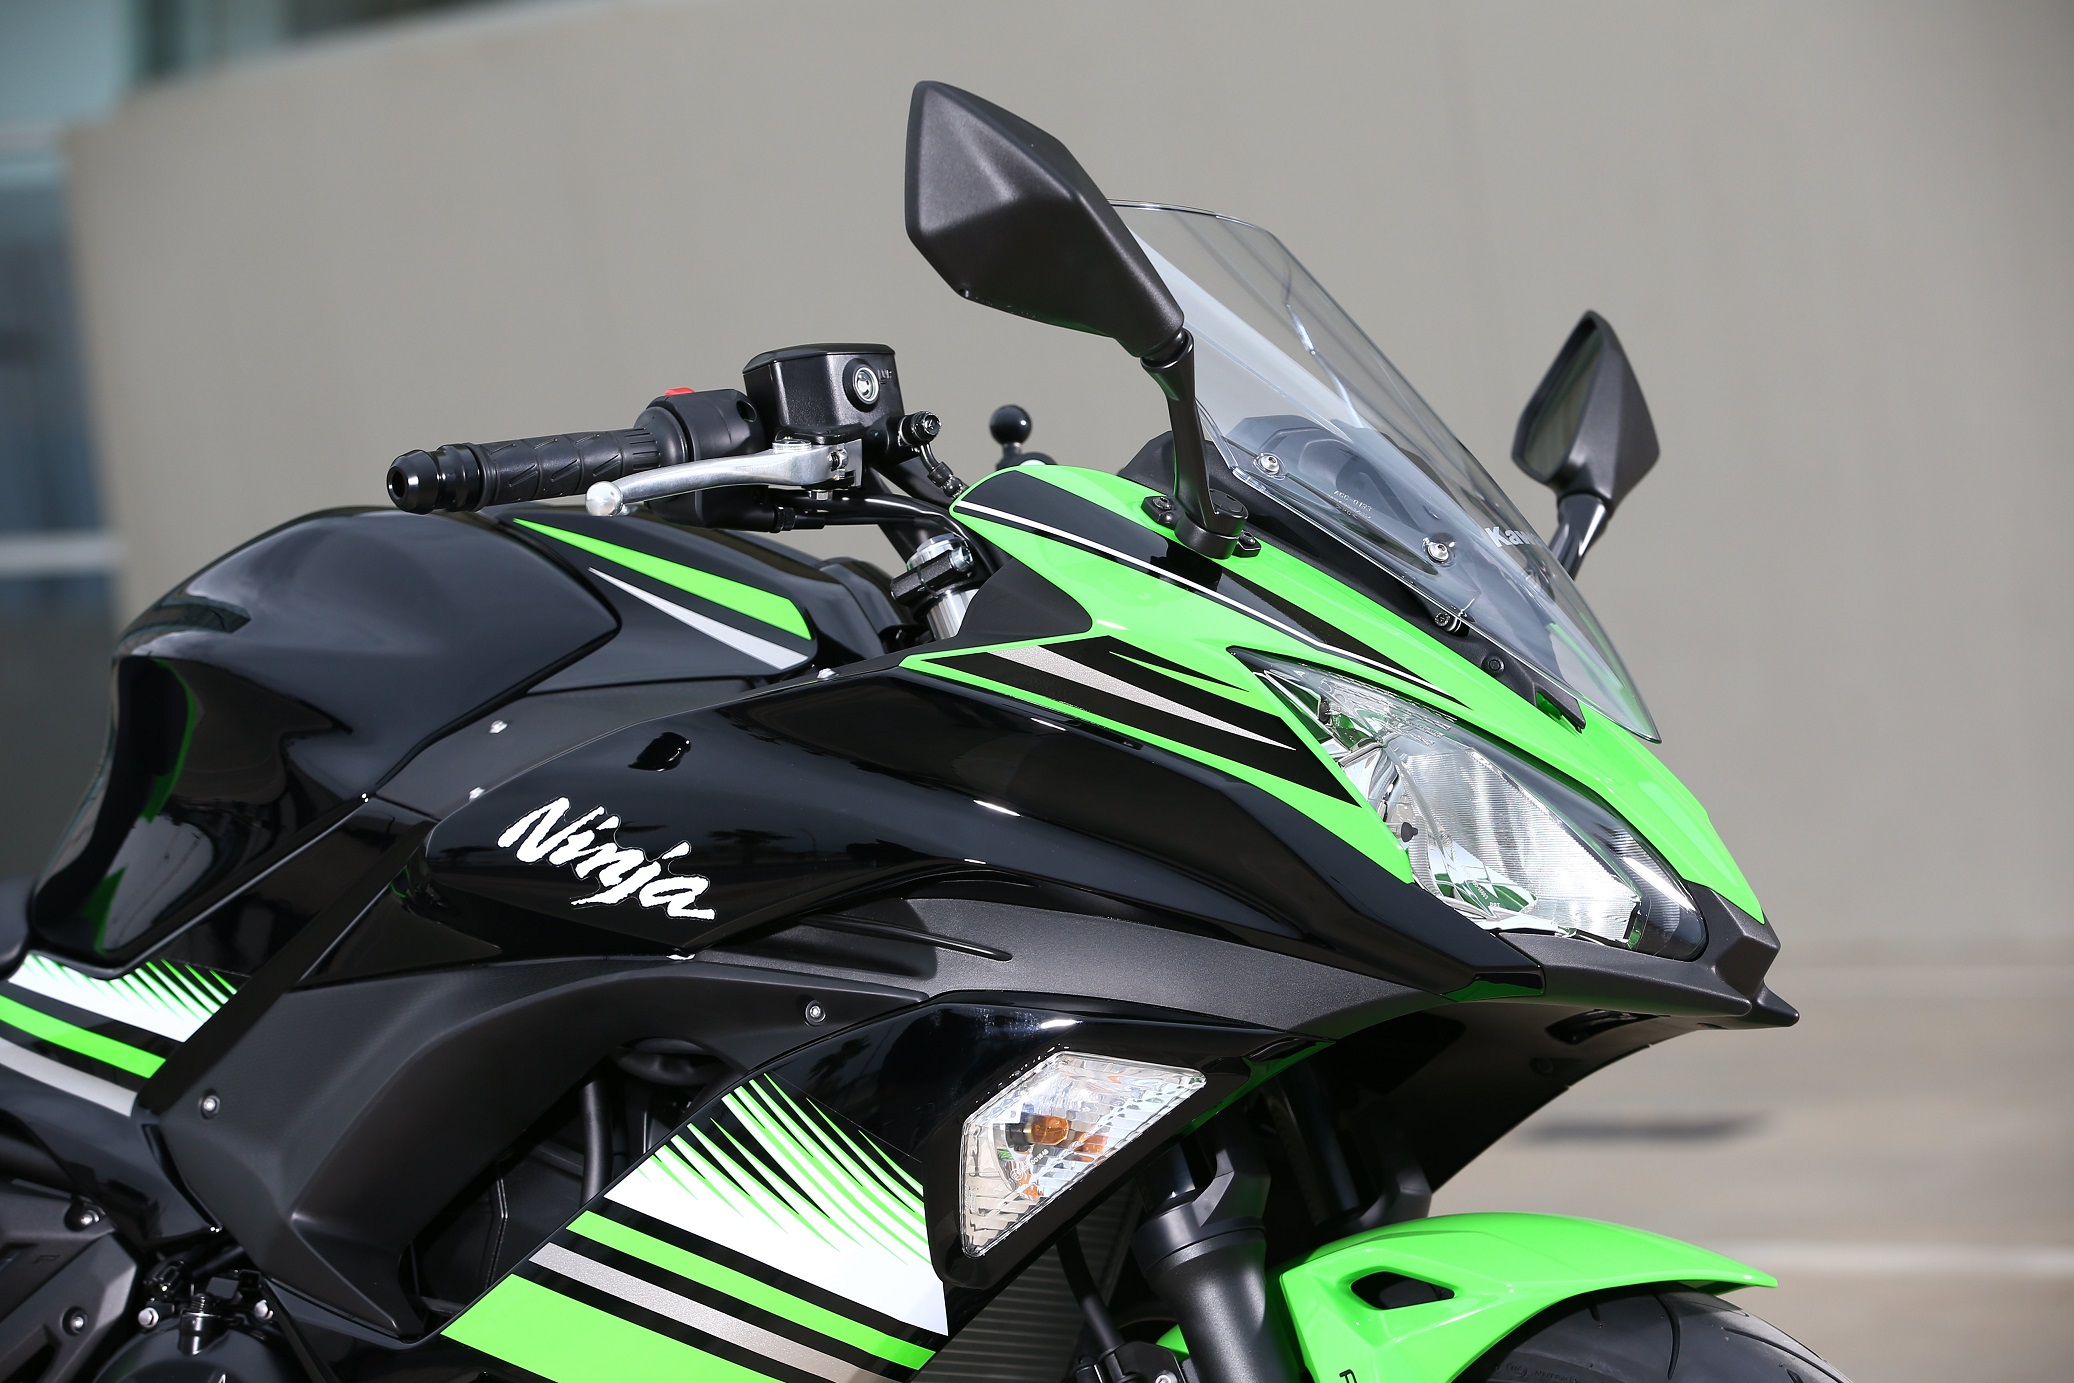 Kawasaki Ninja 650 styling